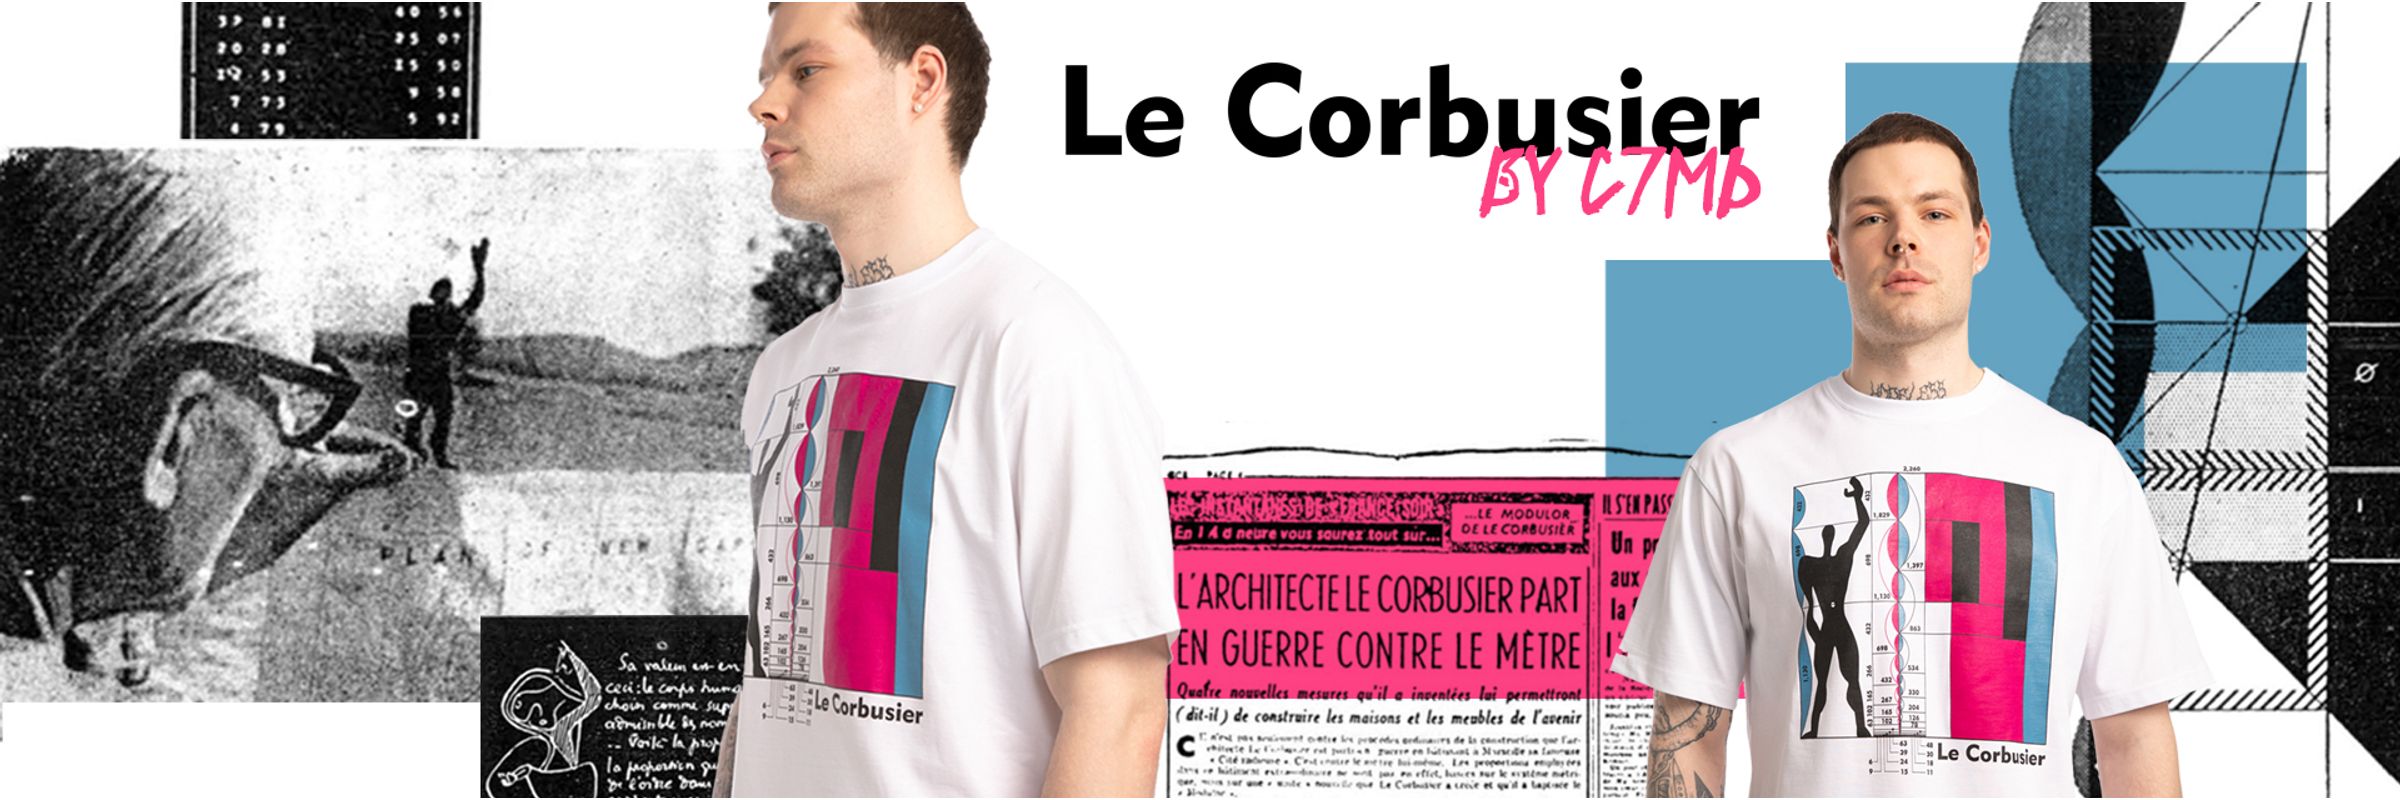 Le Corbusier - архитектор, ставший новатором